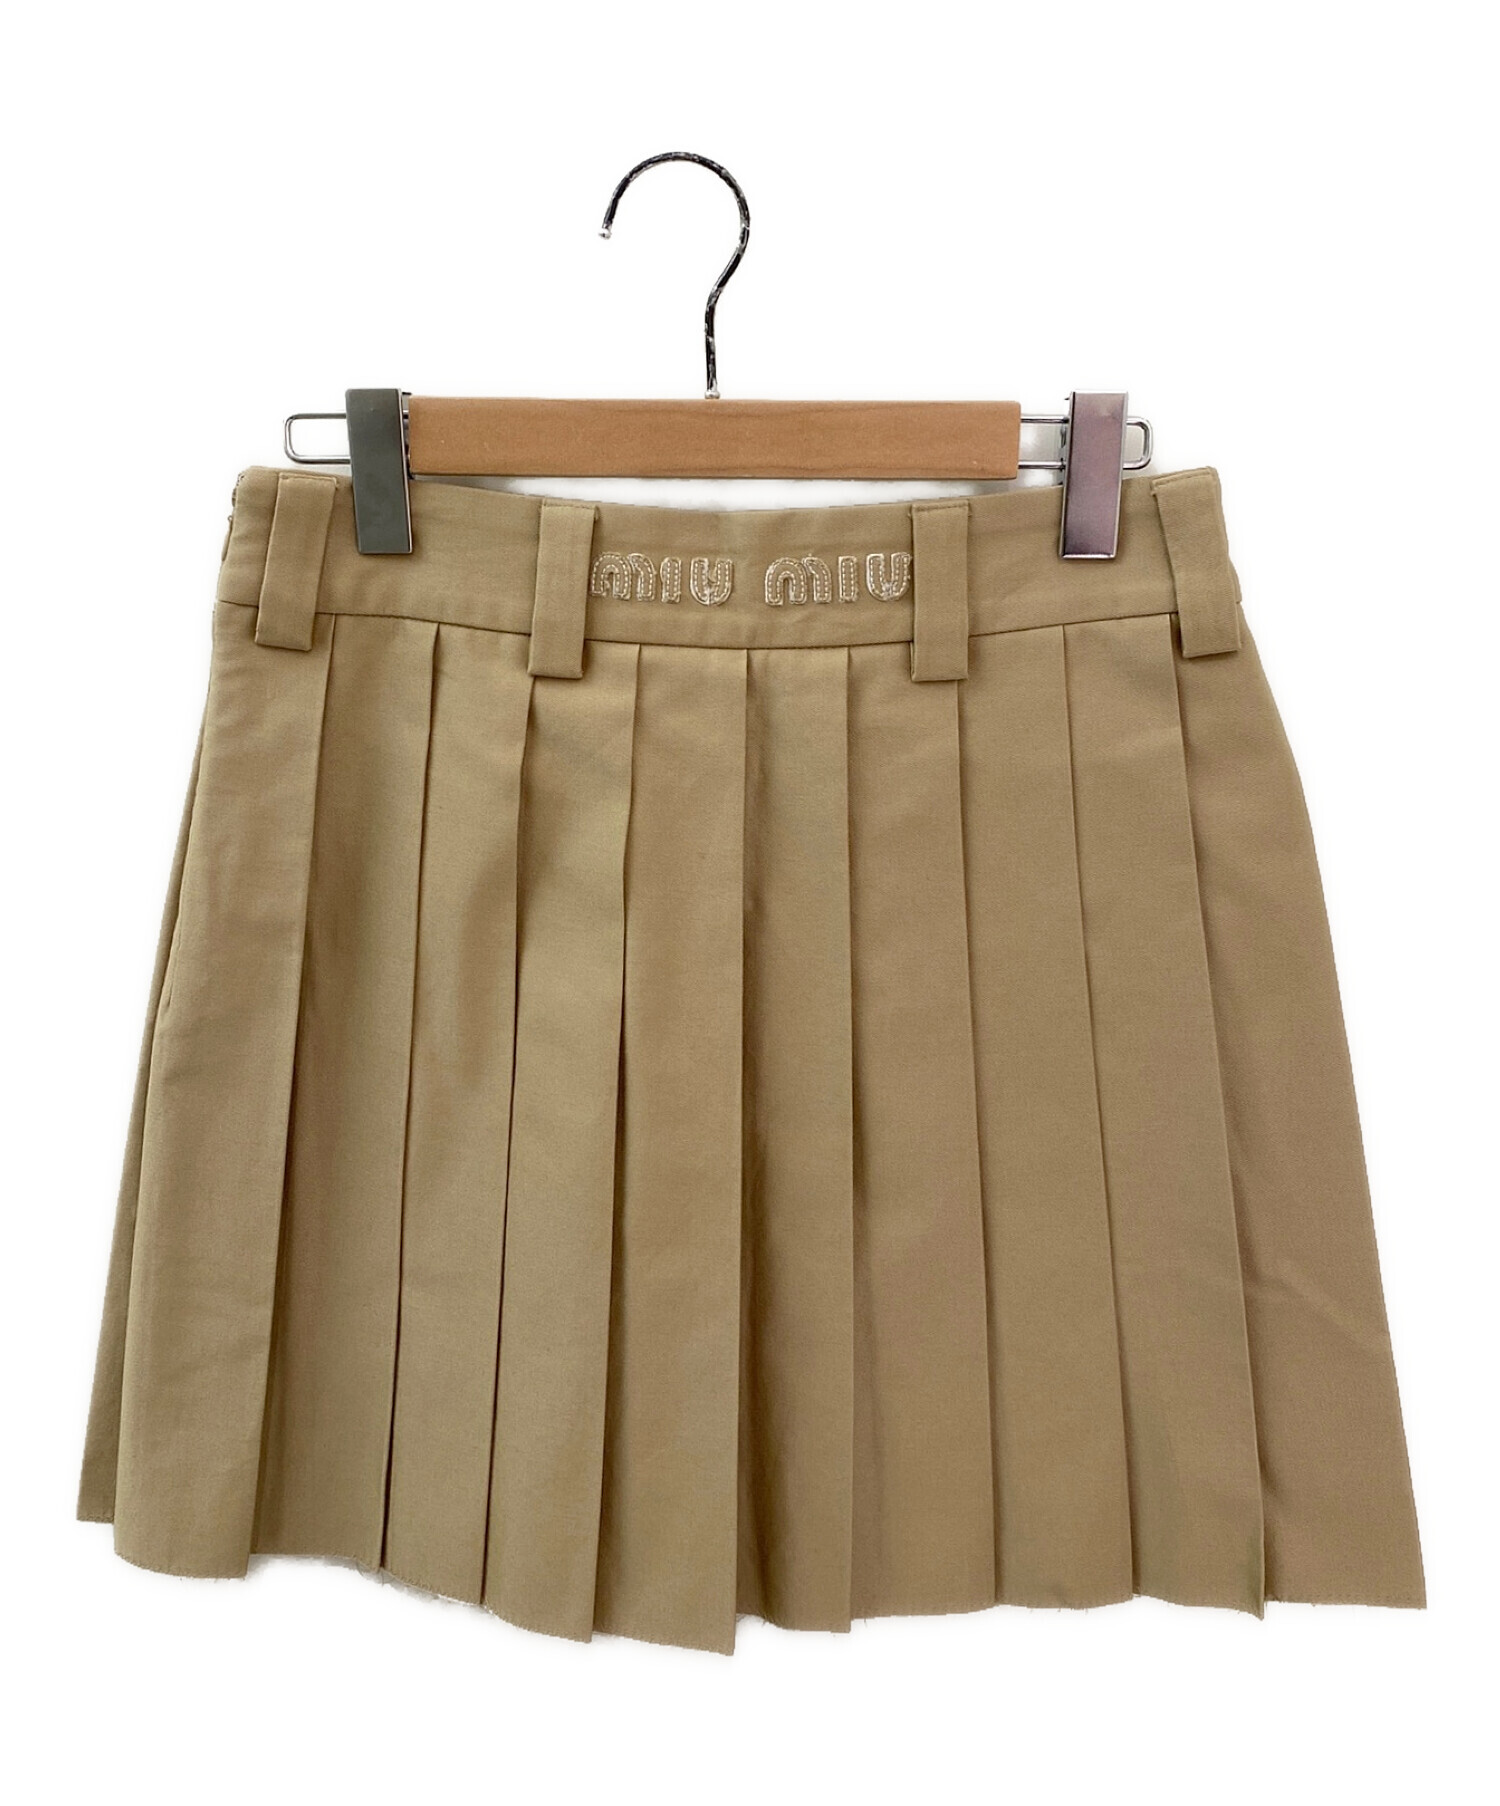 MIU MIU ミュウミュウ スカート size 38 - ミニスカート